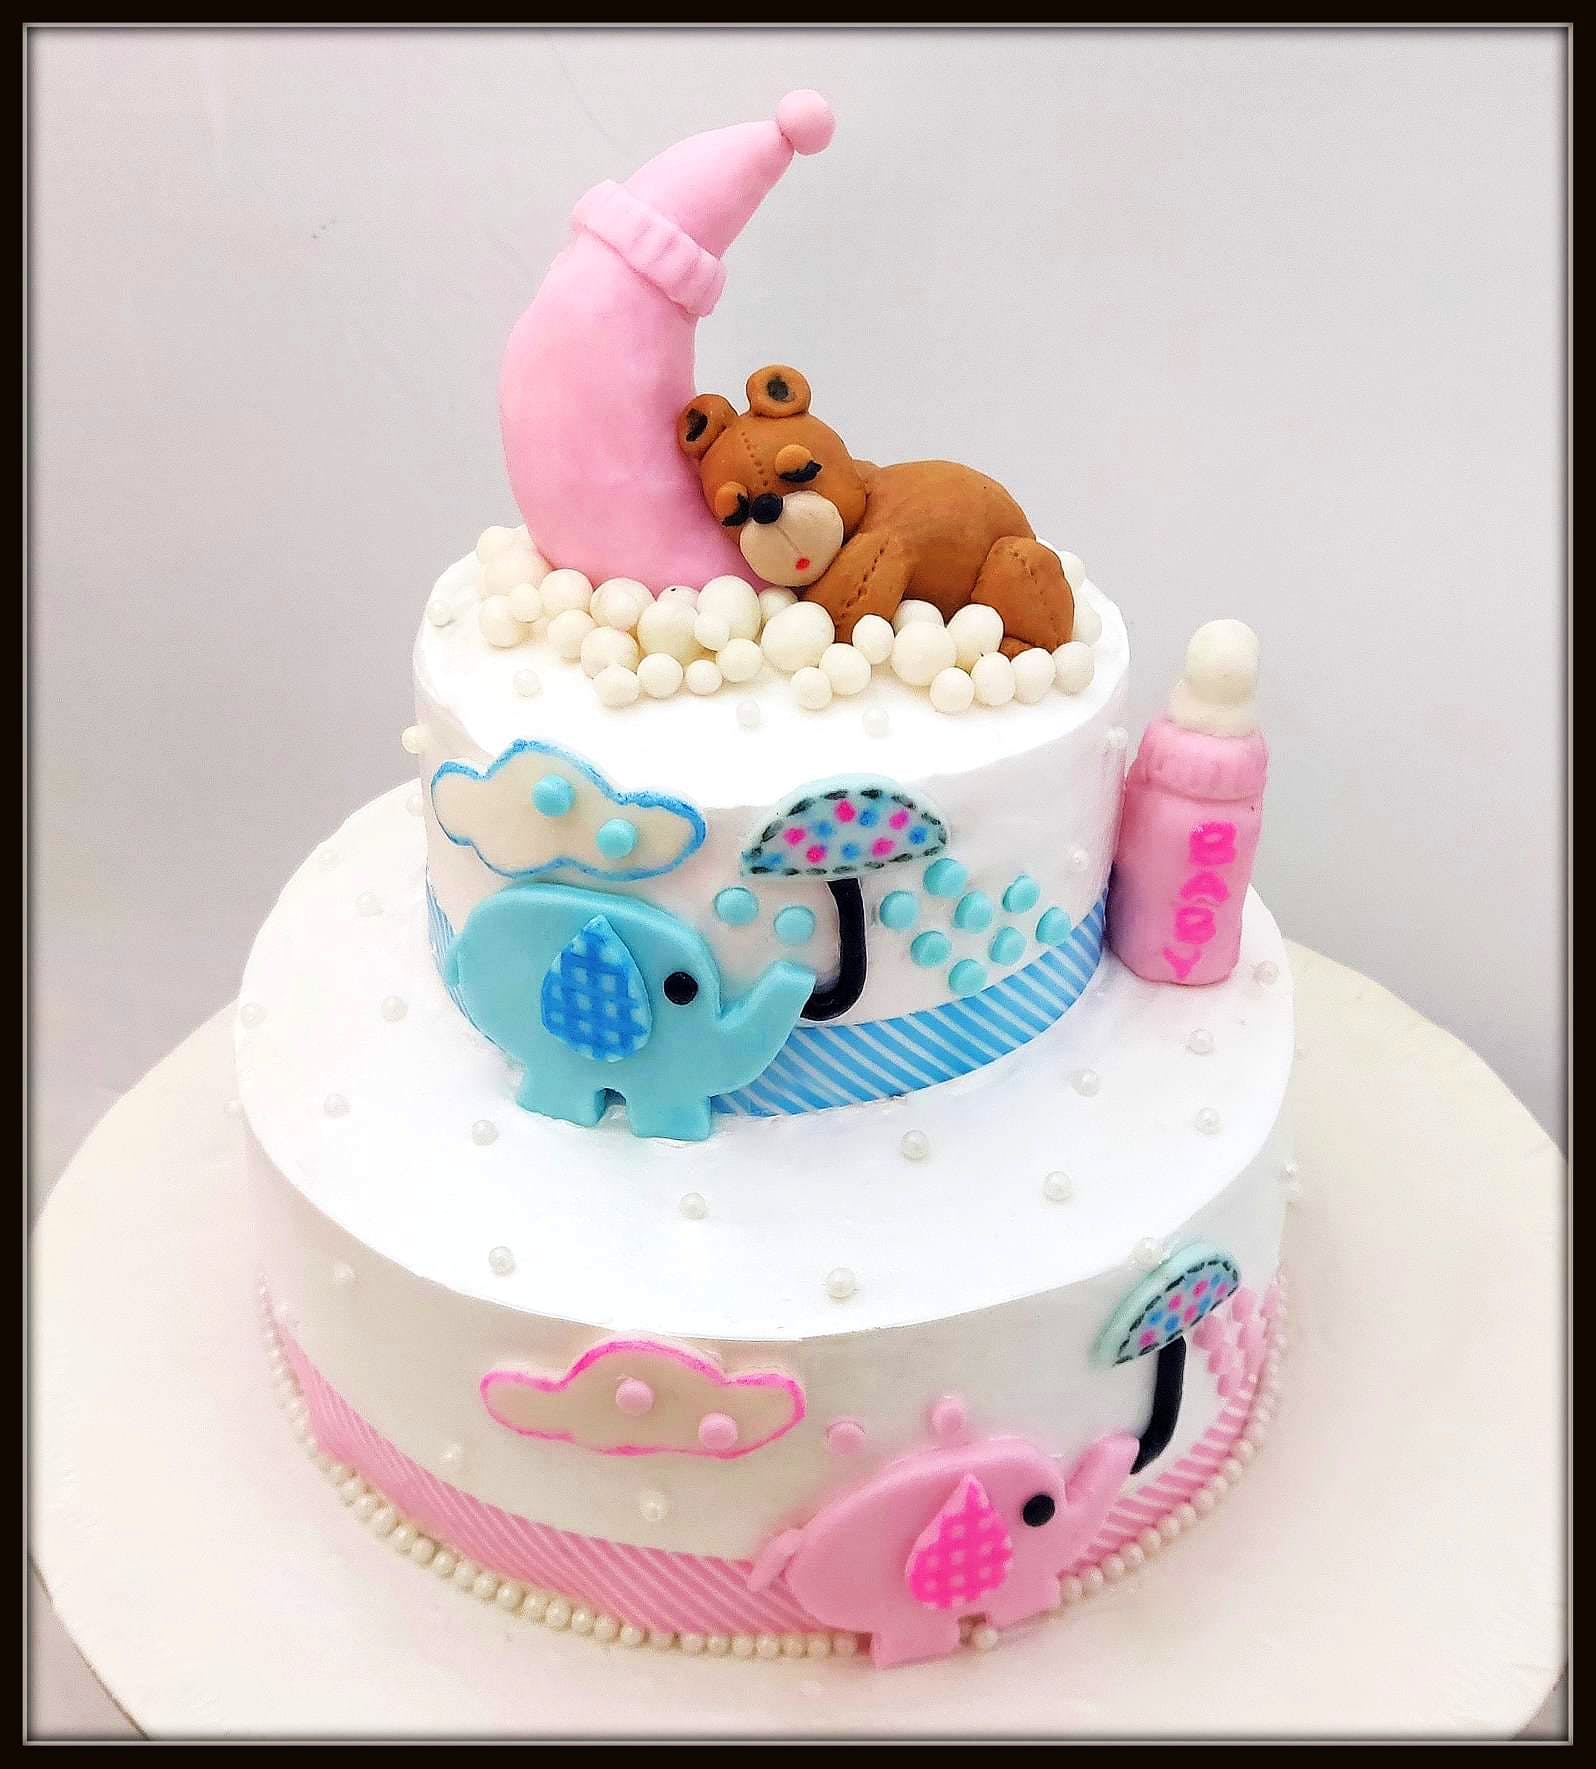 Cake decorating,Cake,Sugar paste,Fondant,Cake decorating supply,Birthday cake,Icing,Sugar cake,Pasteles,Torte